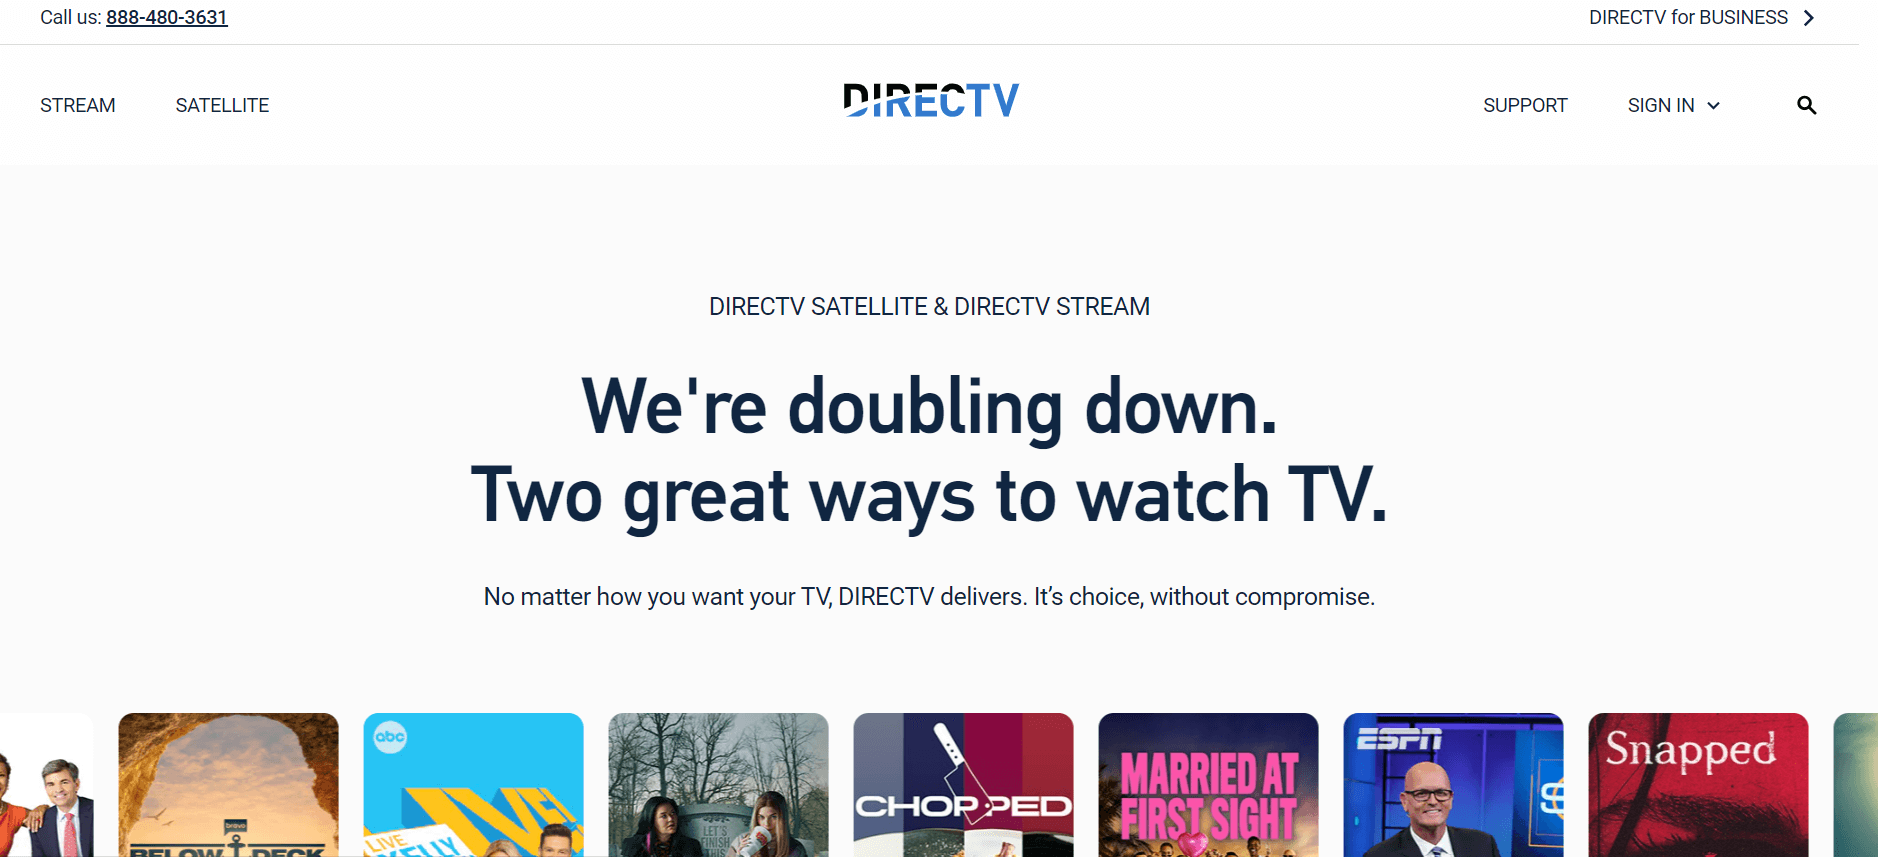 direcTV-website-outside-USA 